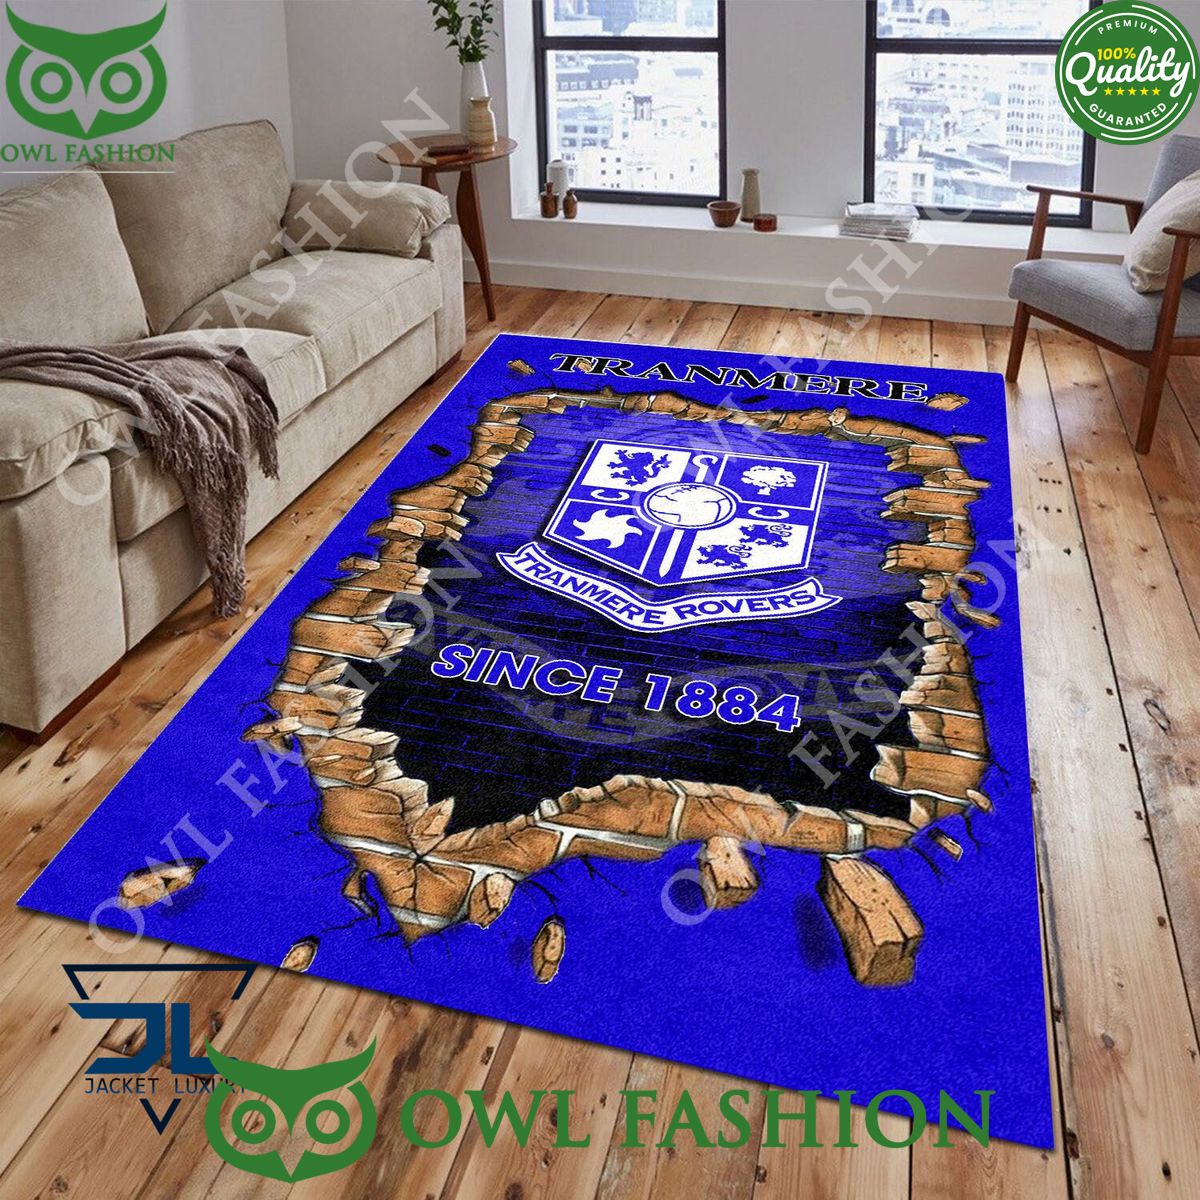 Tranmere Rovers 1863 League Two Living Room Rug Carpet Nice shot bro